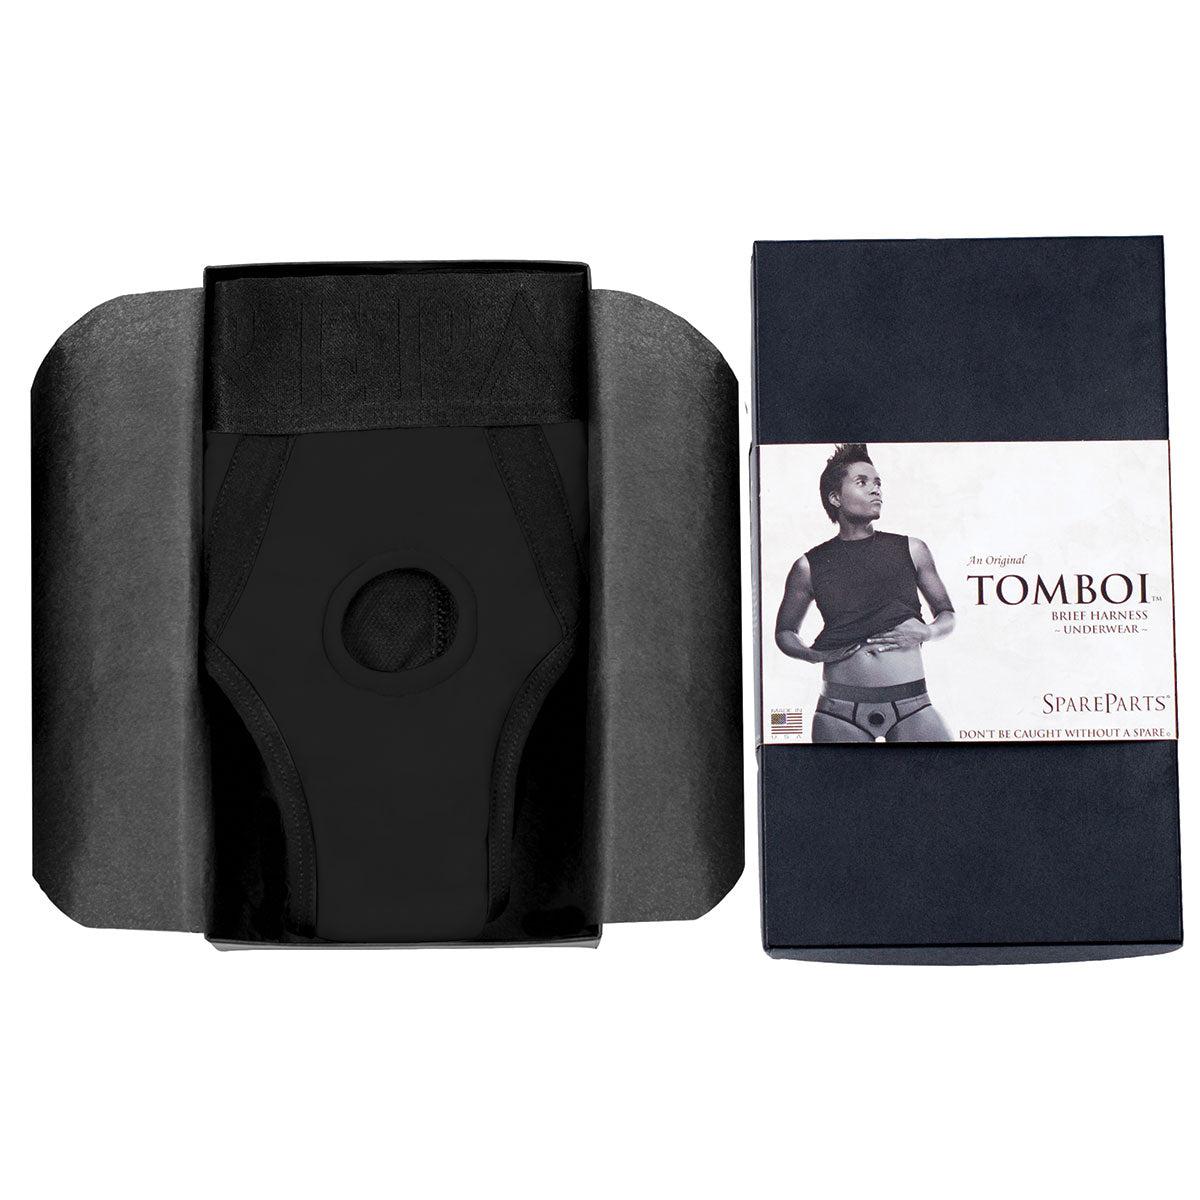 SpareParts Tomboi Harness Briefs